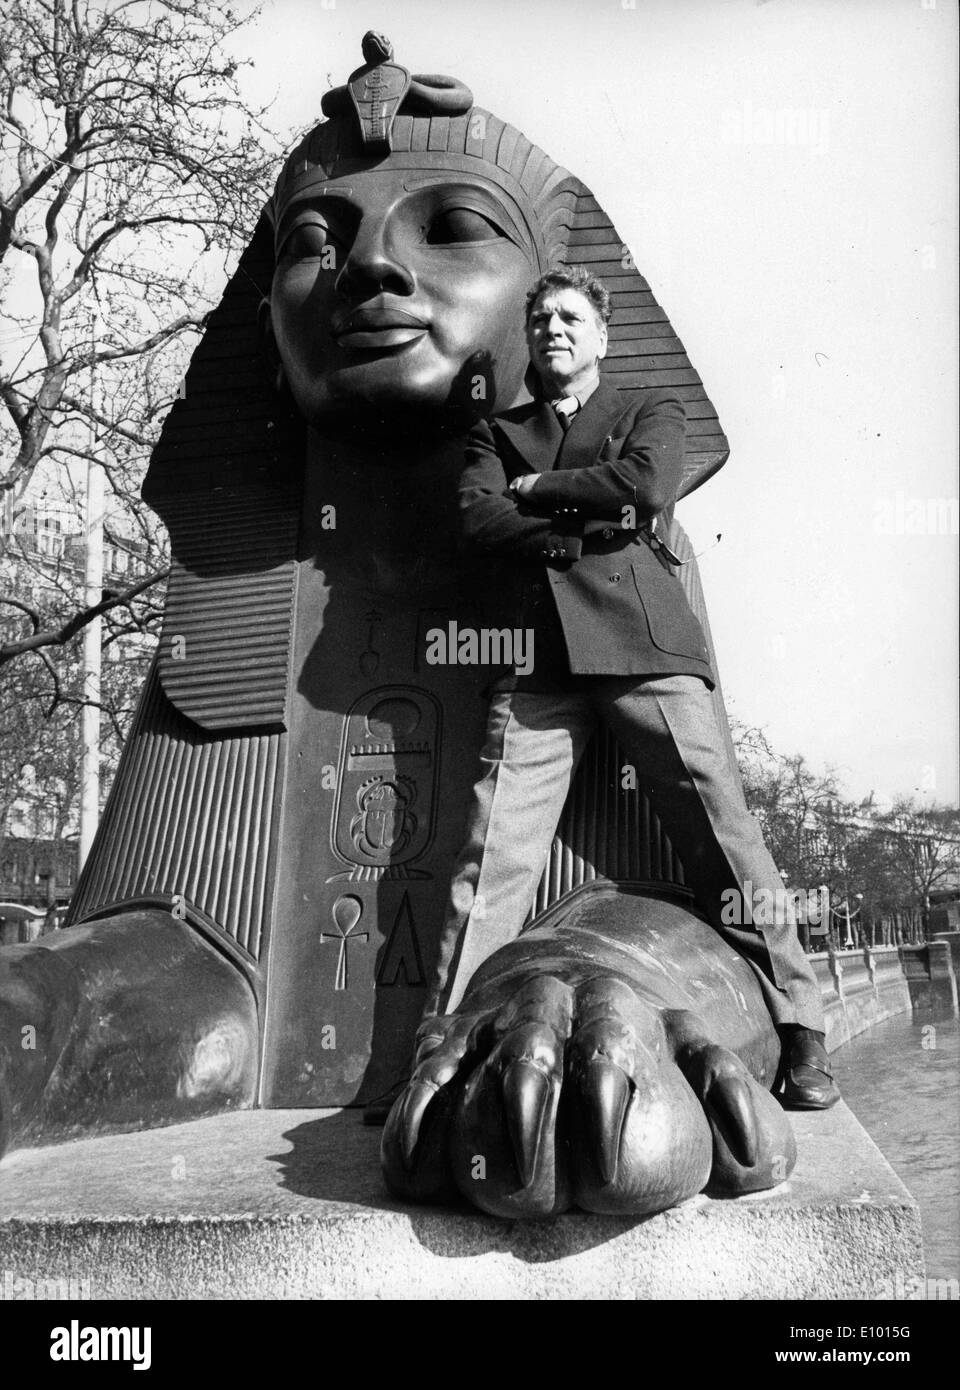 Burt Lancaster on Sphinx at Embankment Gardens Stock Photo